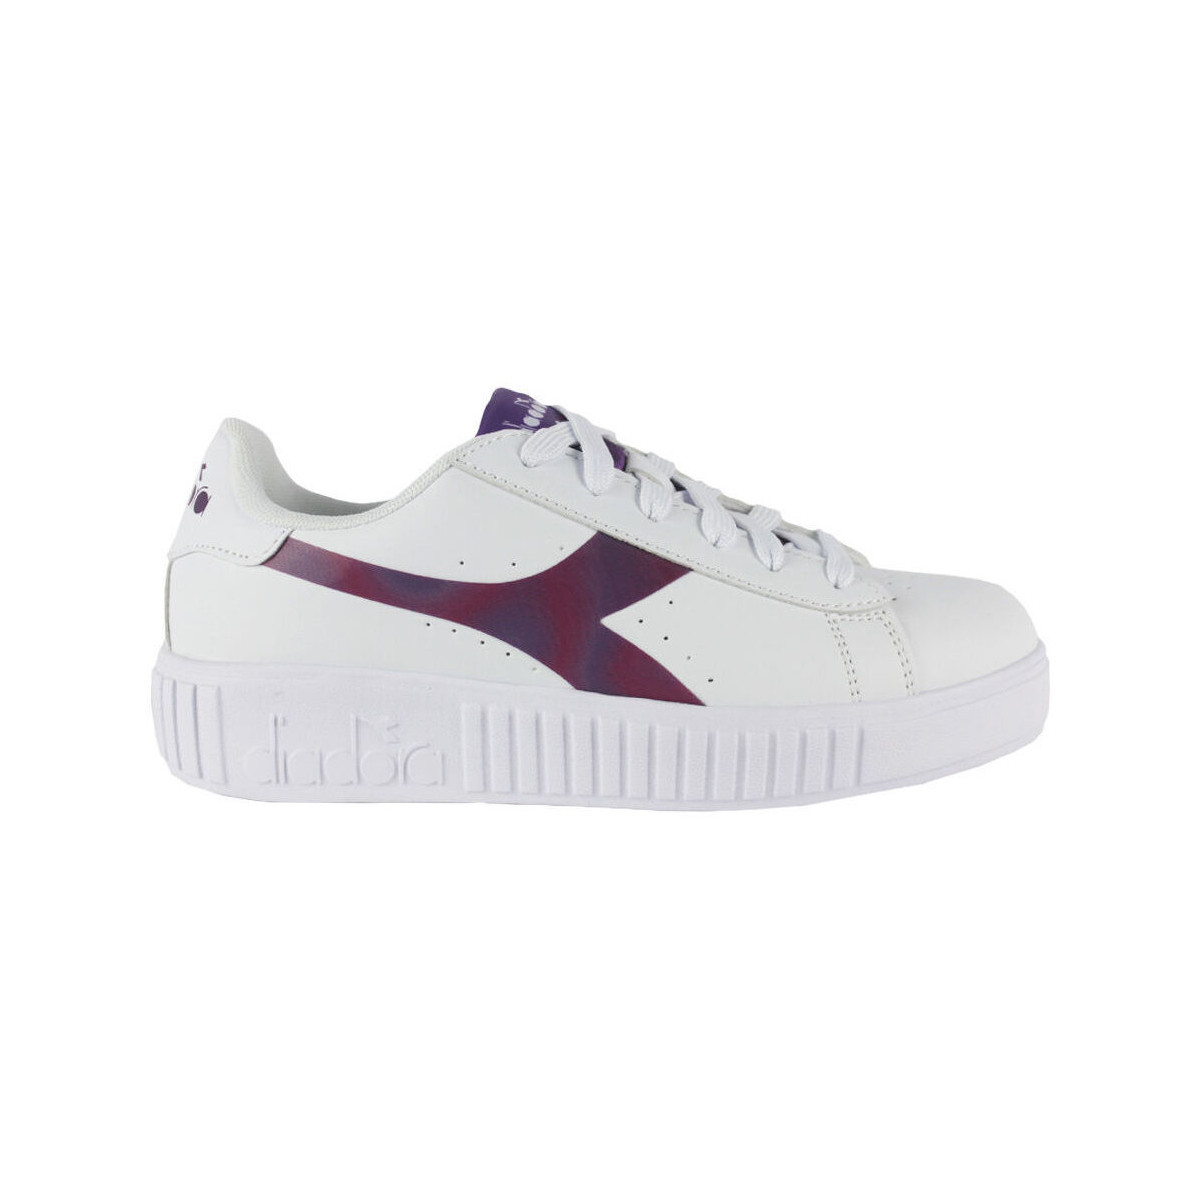 Pantofi Copii Sneakers Diadora GAME STEP C7821 White/Dahlia mauve Alb